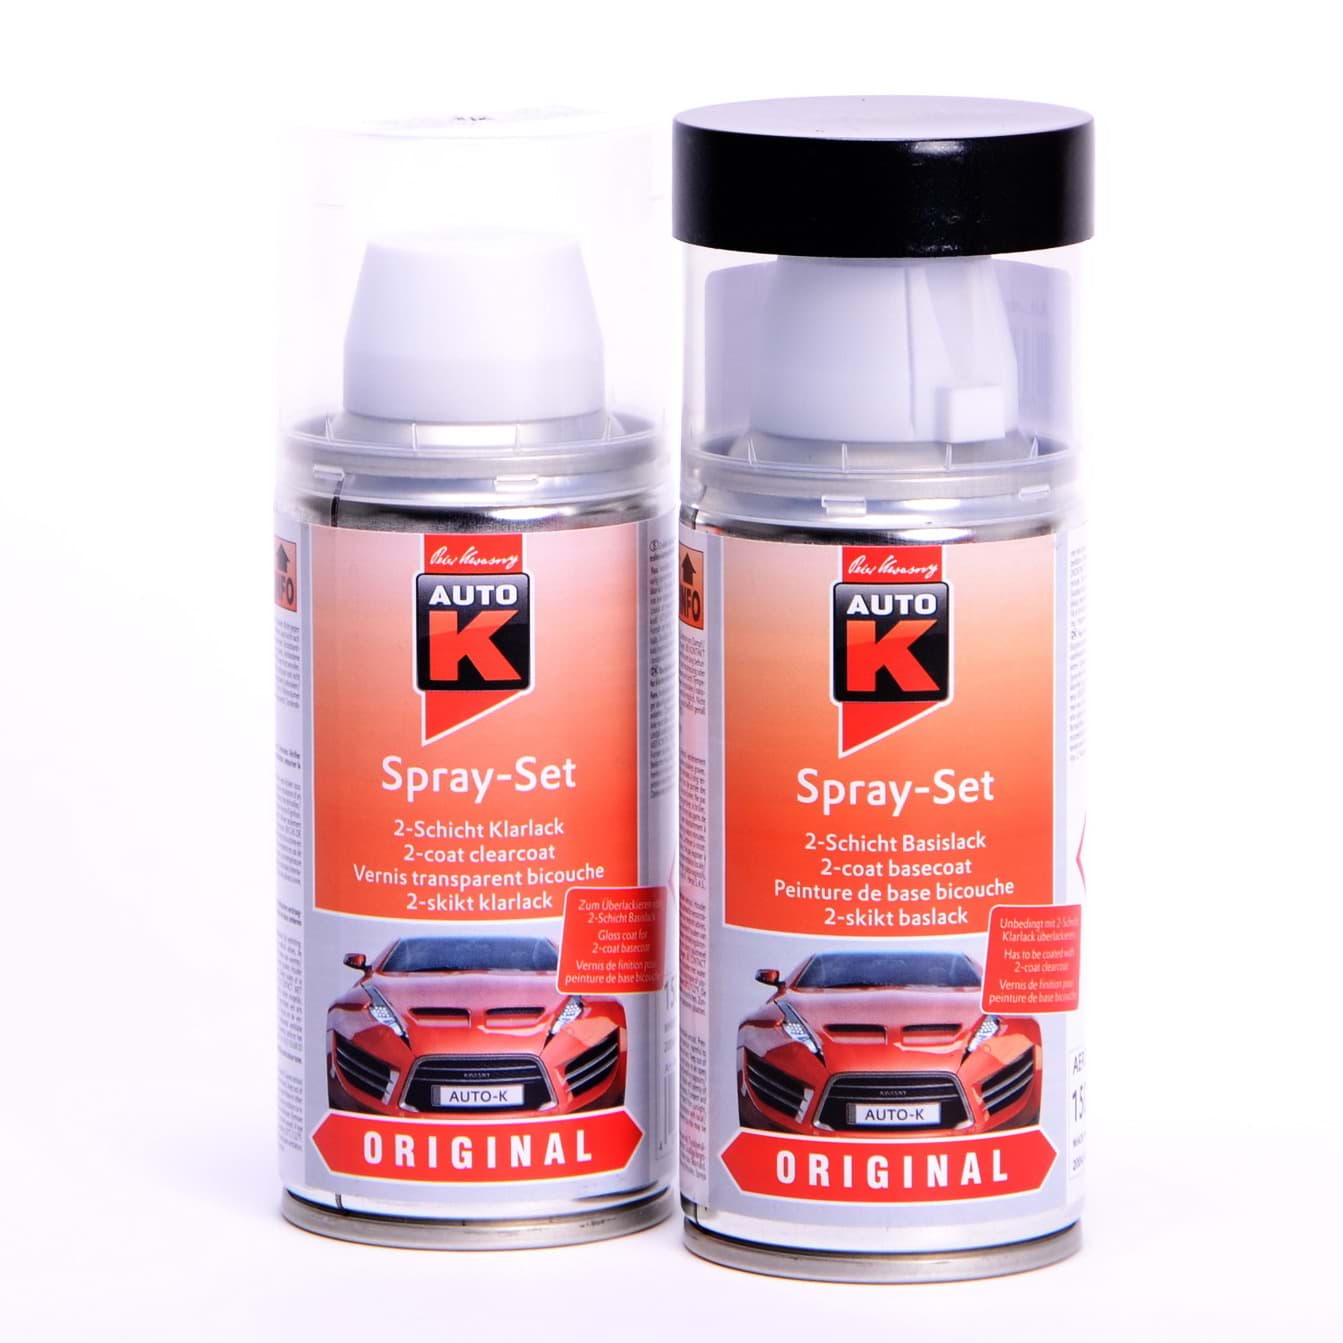 Afbeelding van Auto-K Spray-Set Autolack für Volkswagen VW, Audi LP3G Flashrot 20712